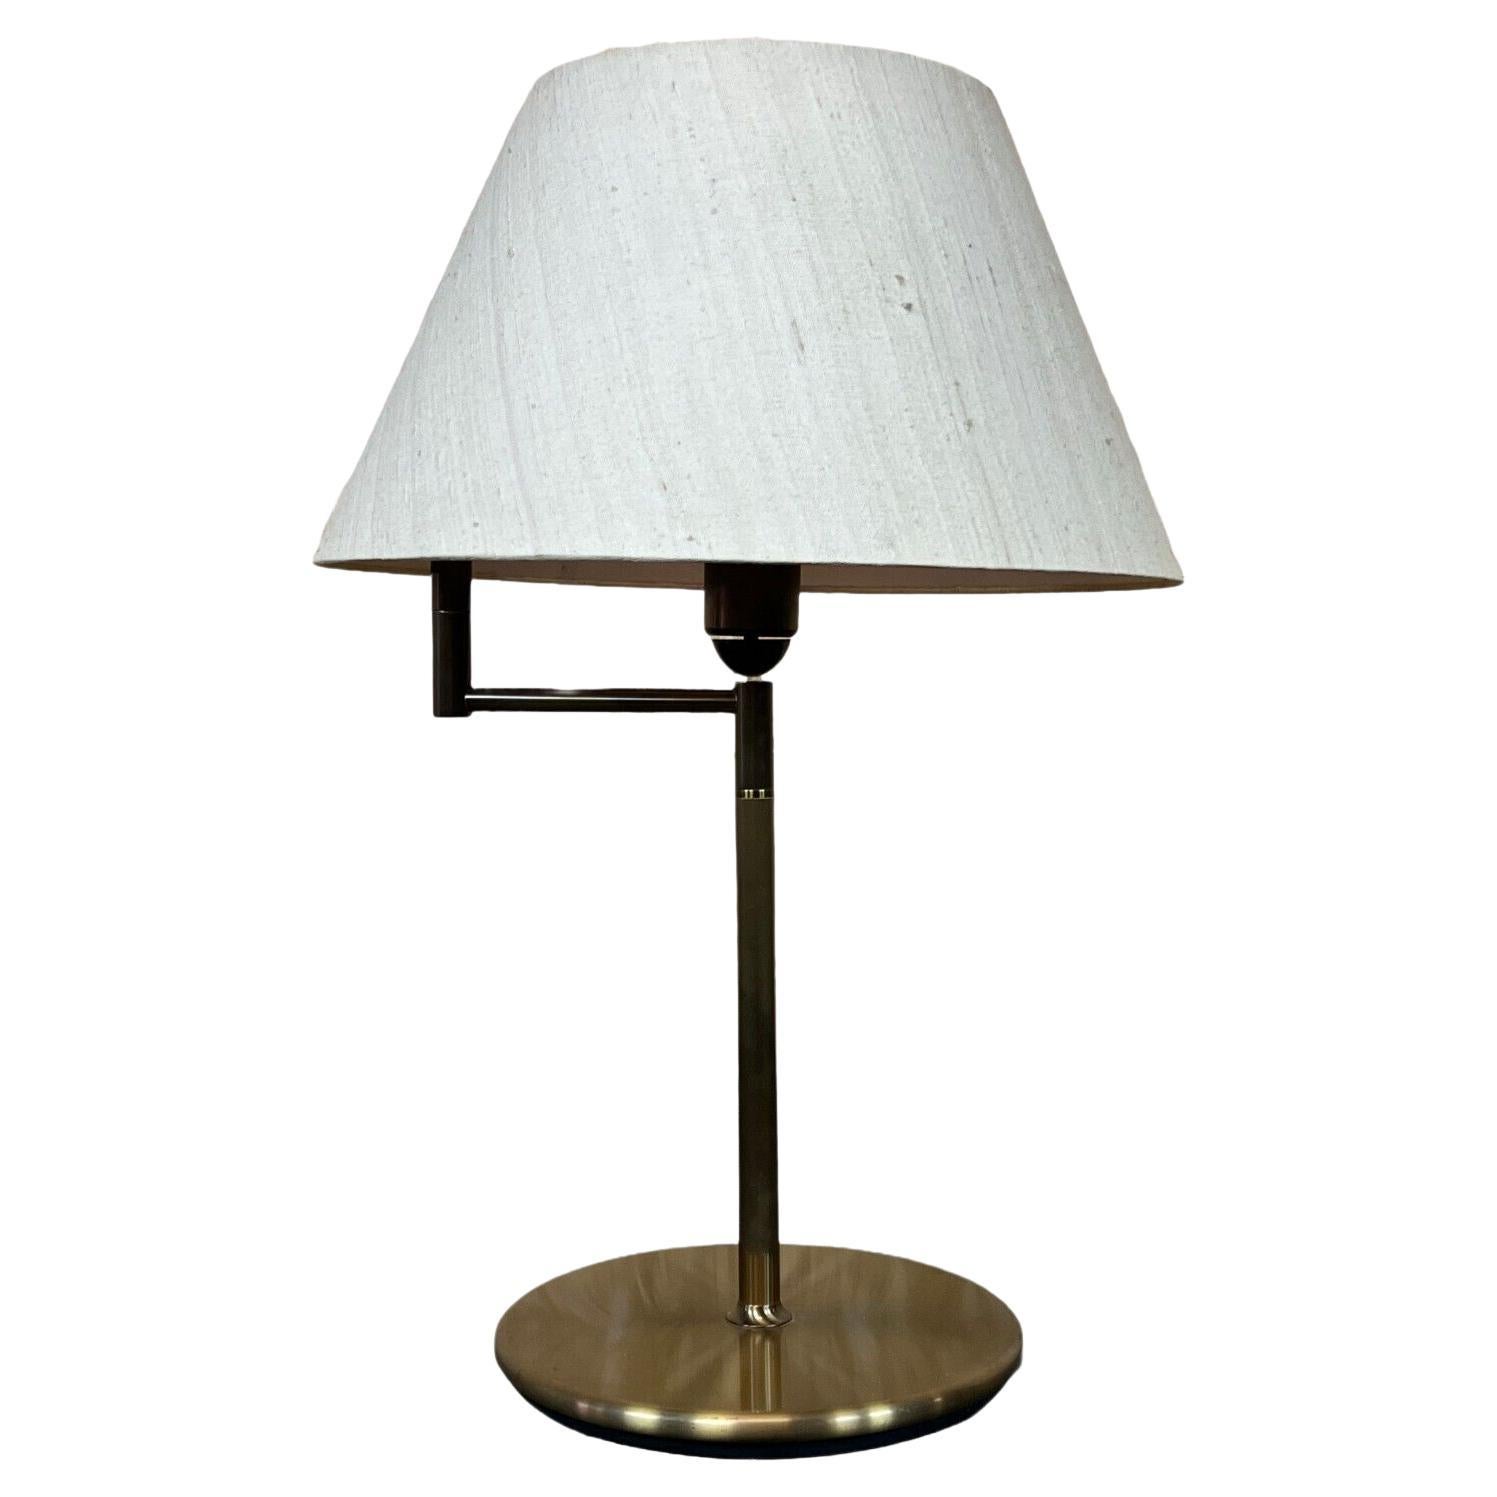 60s 70s Lamp Light Table Lamp Brass Swivel Space Age Design